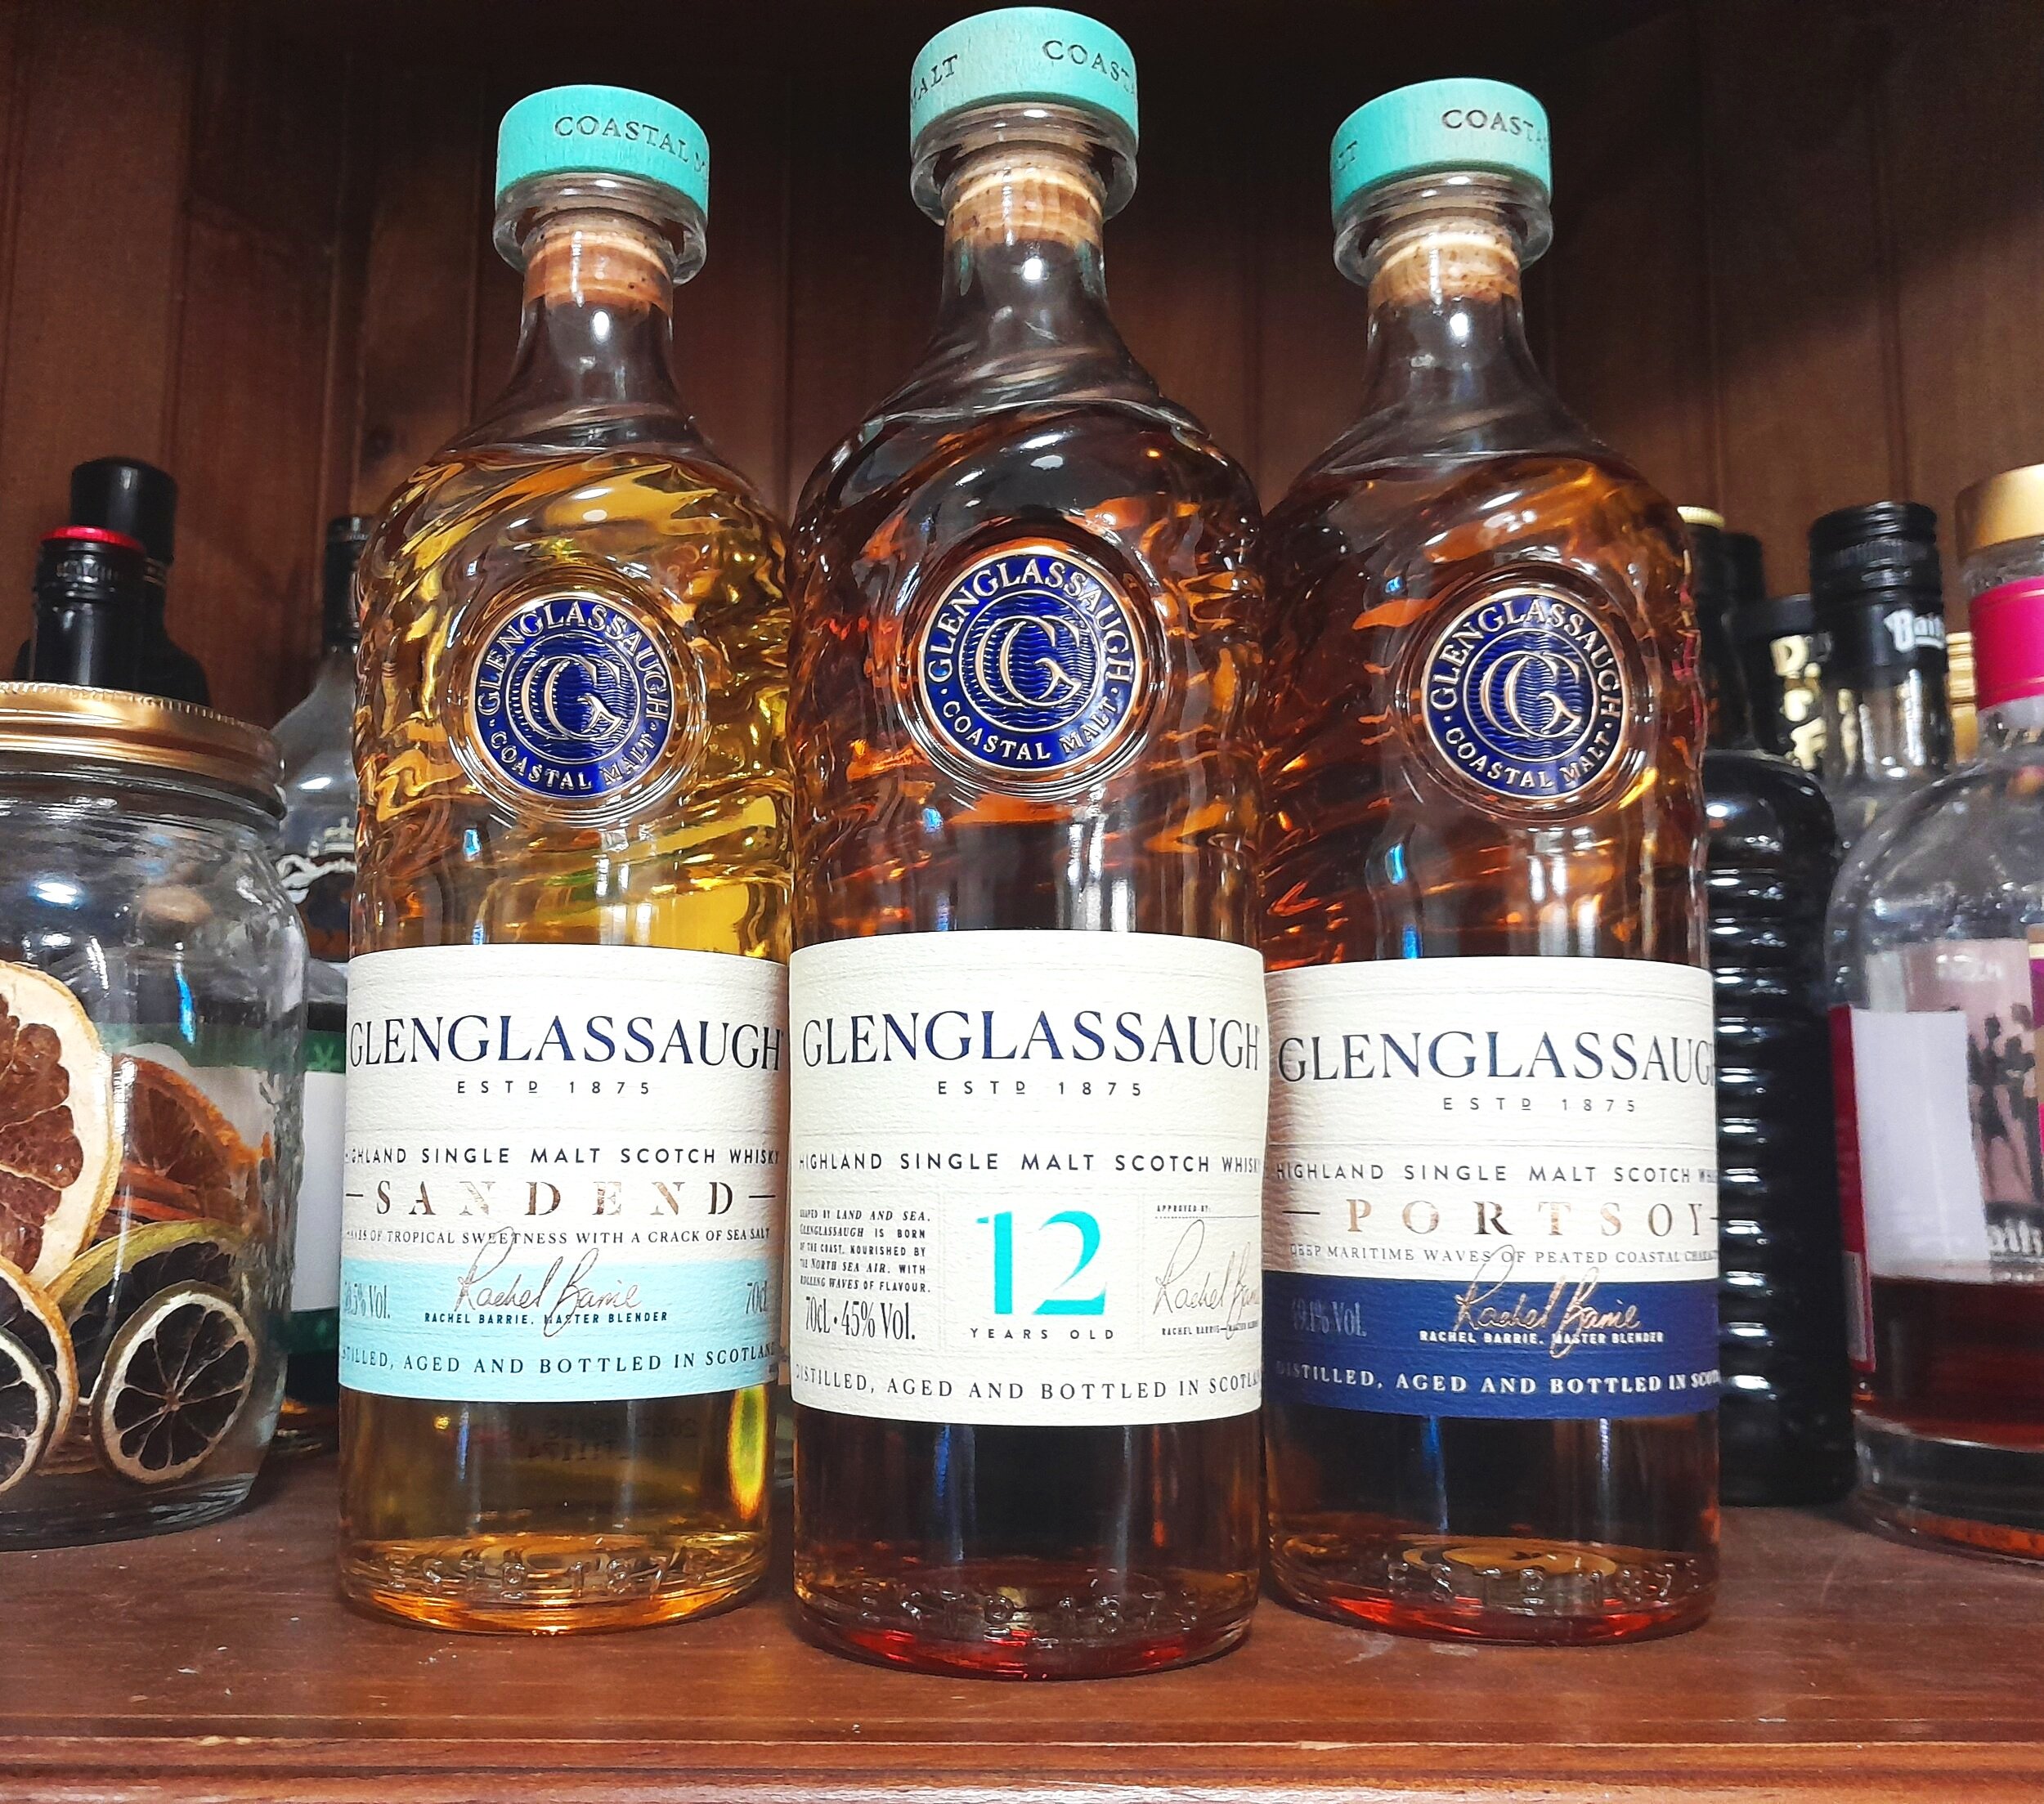 Glenglassaugh Sandend Whisky – Market Hall Wines